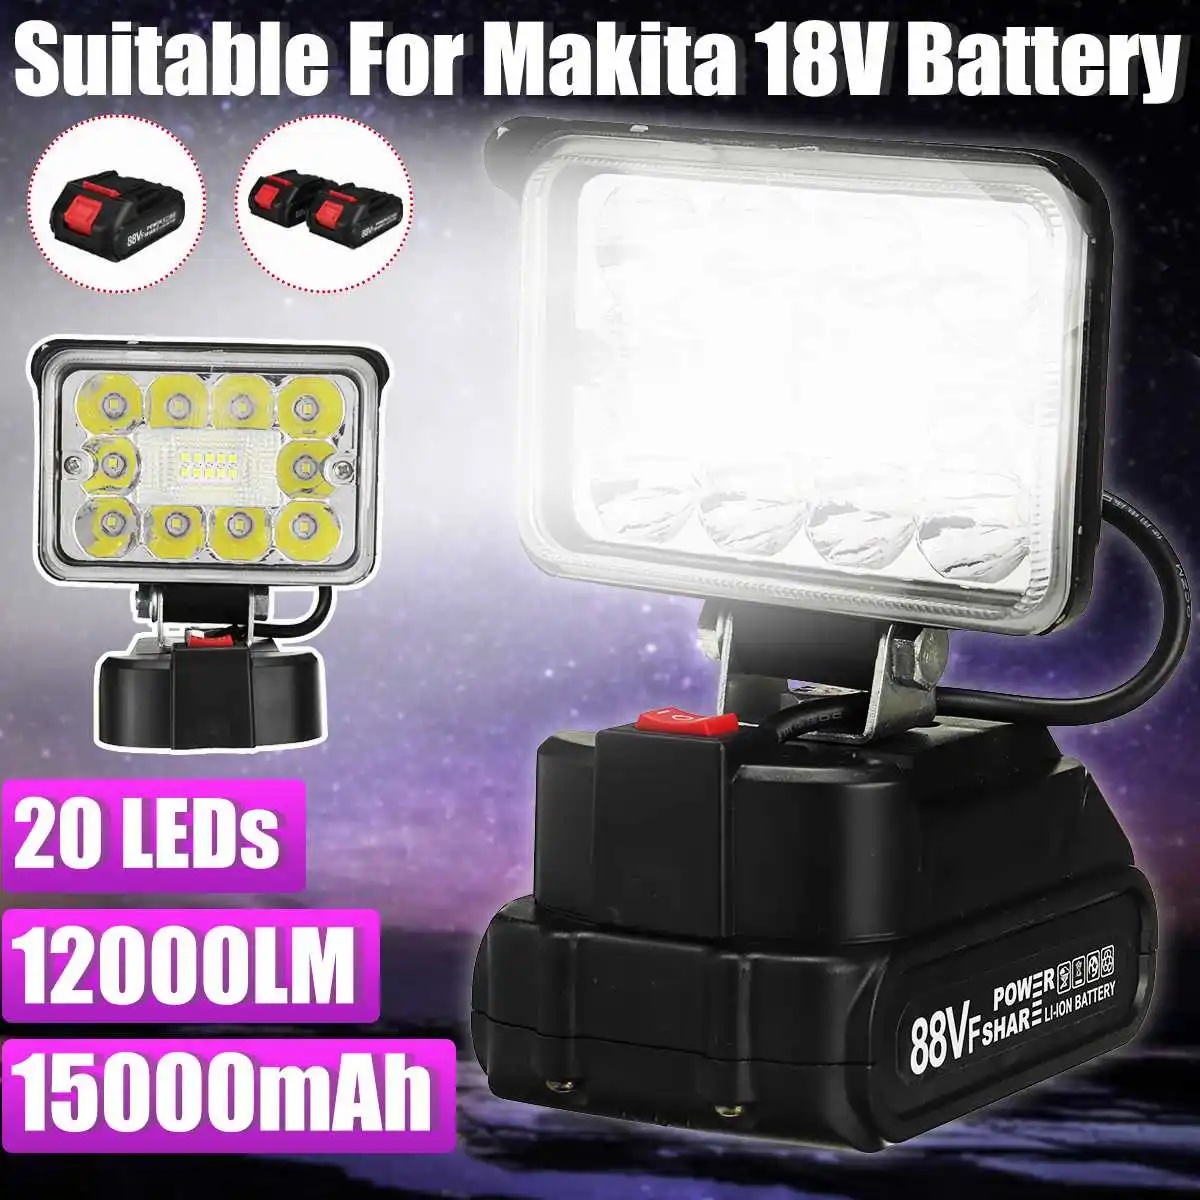 

12000LM 20 LEDS 88VF Portable Spotlight Work Light 3 Inch 2 Gears Torch Outdoor Camping Light For Makita 18V Battery EU Plug